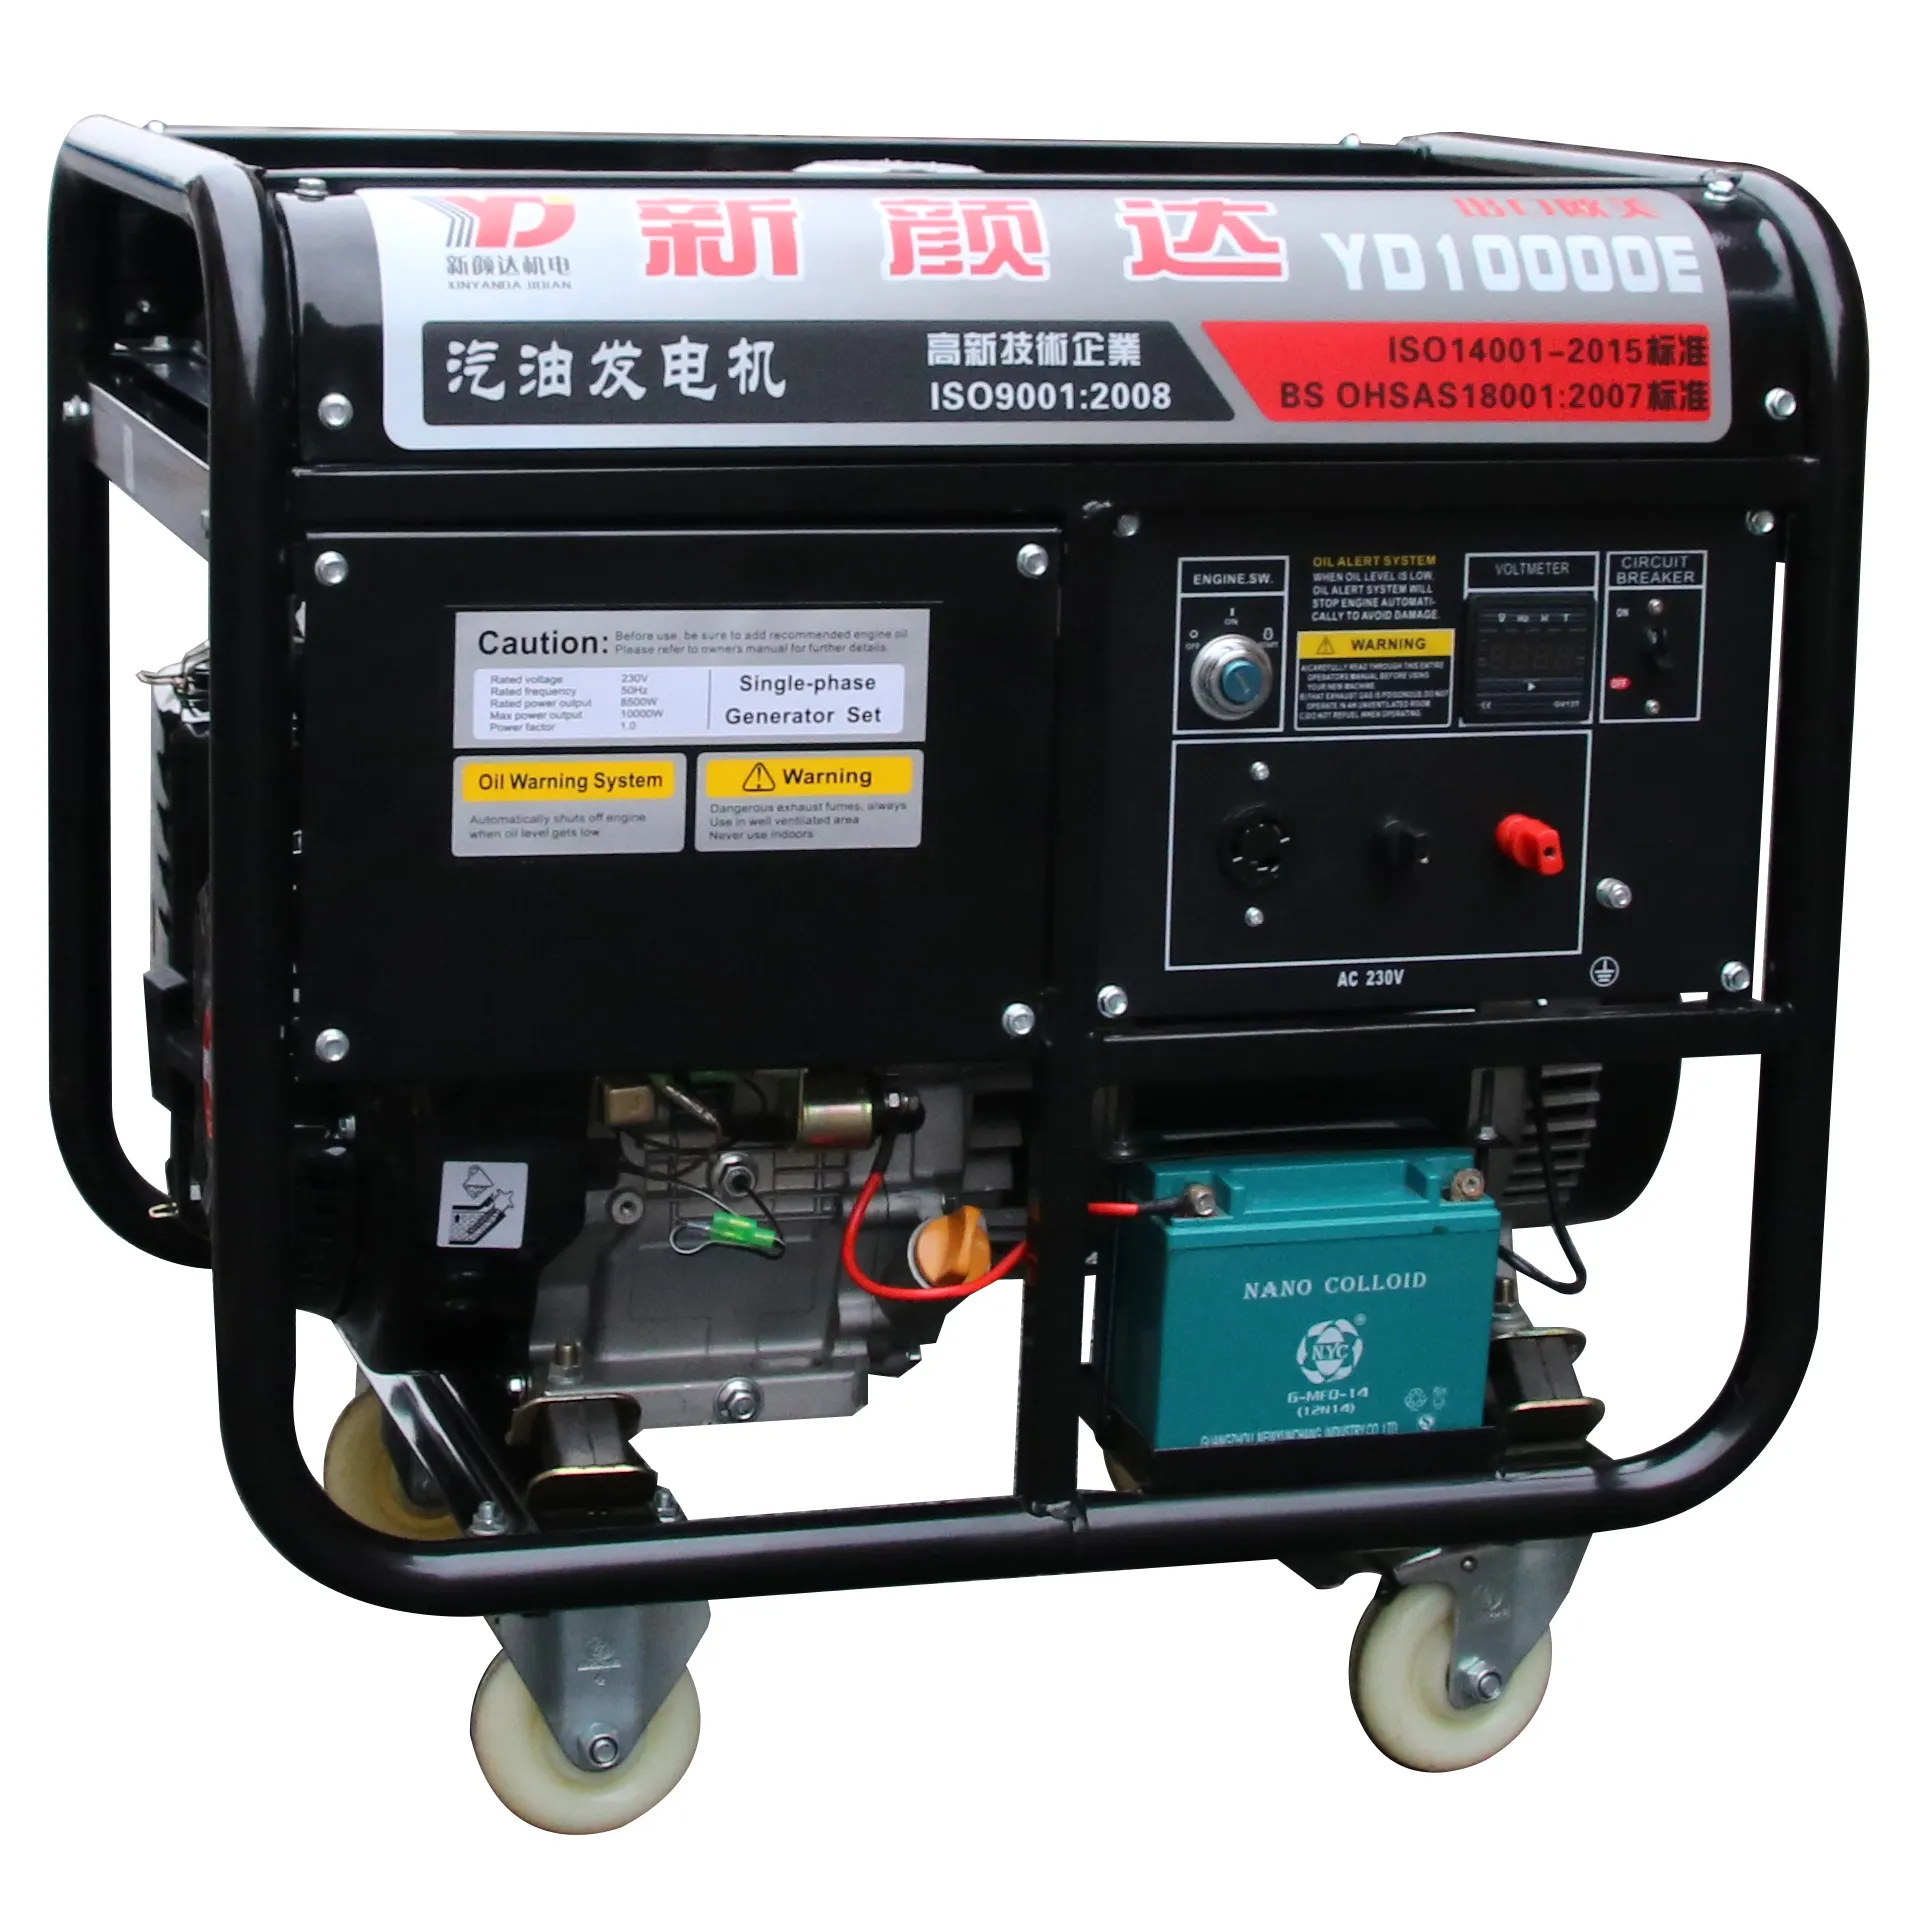 Electric start 8KW single phase gasoline generator set for 110V 220V 230V 240V 380V 400V power